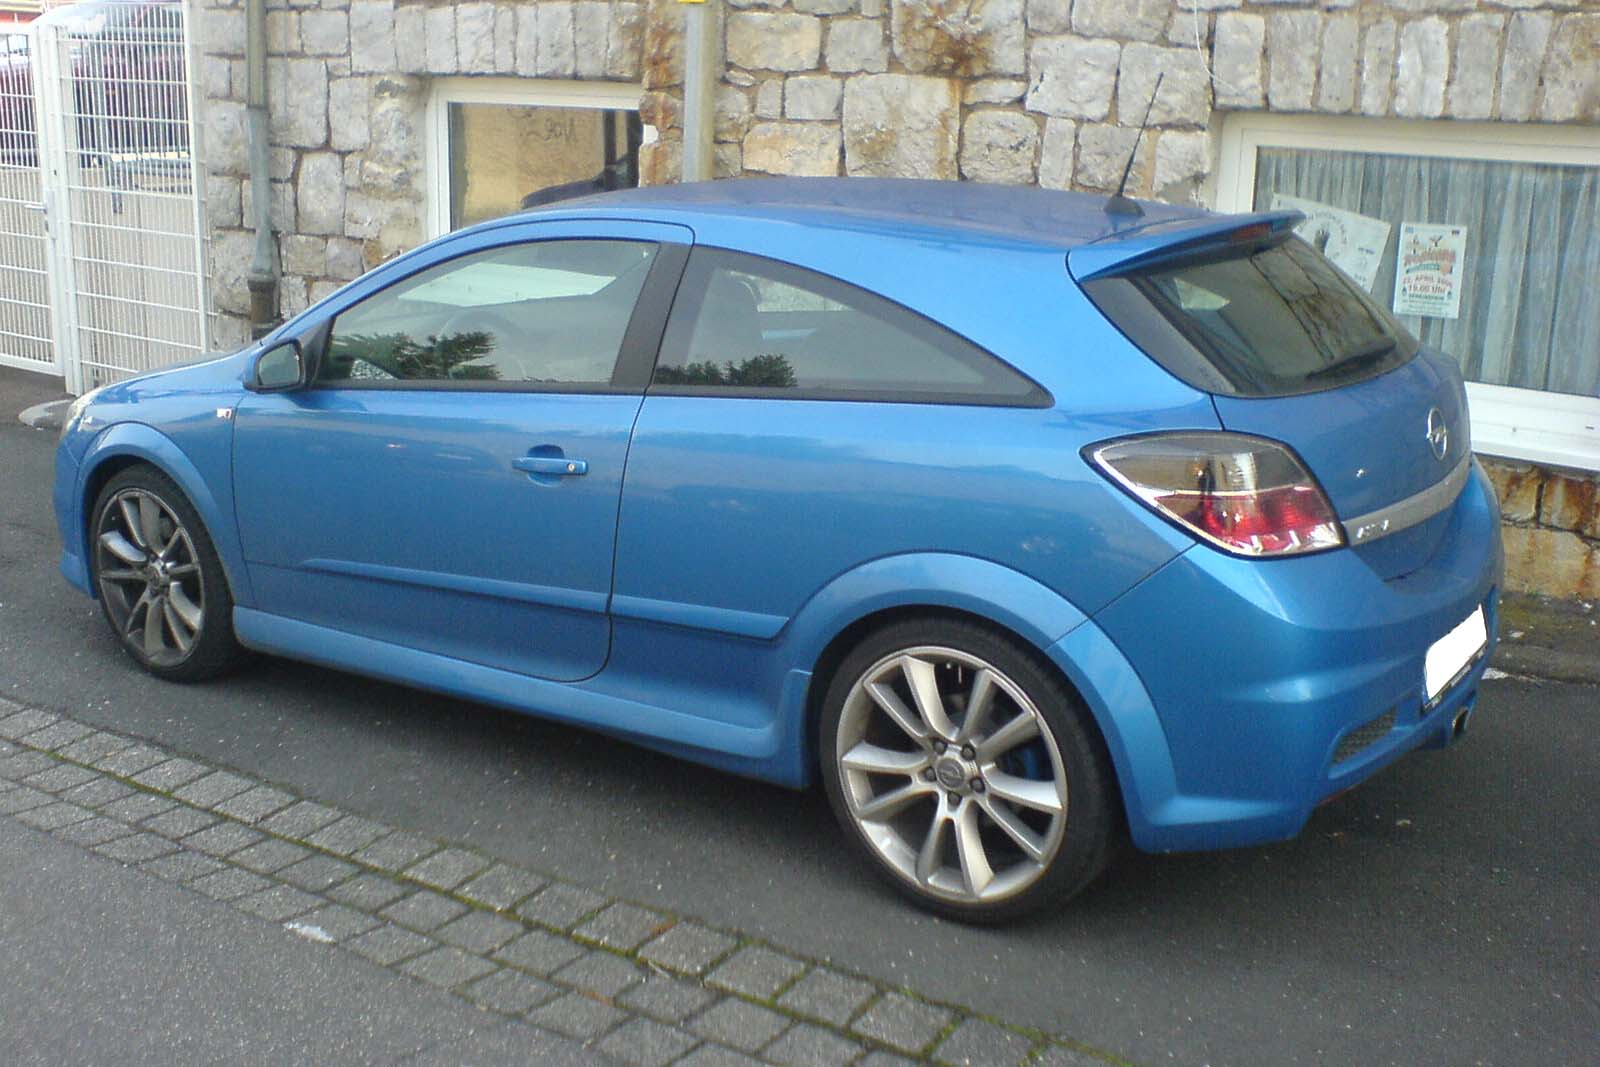 File:Opel Astra OPC blau hl.jpg - Wikimedia Commons